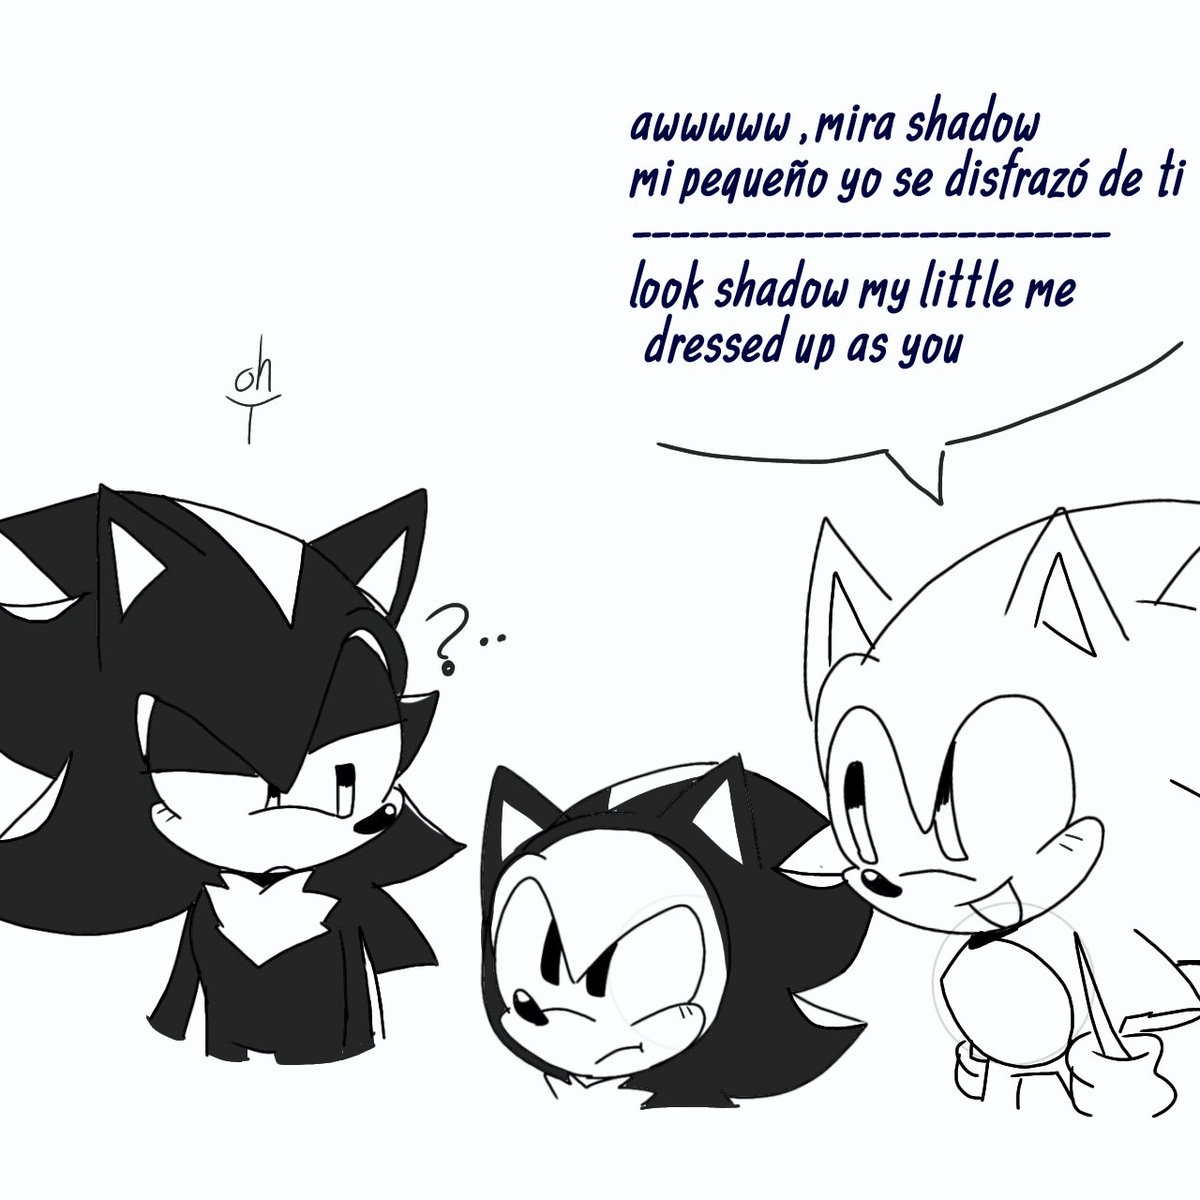 #SonicSuperstars #SonicTheHedgehog #ShadowTheHedgehog 
Jsjsjj